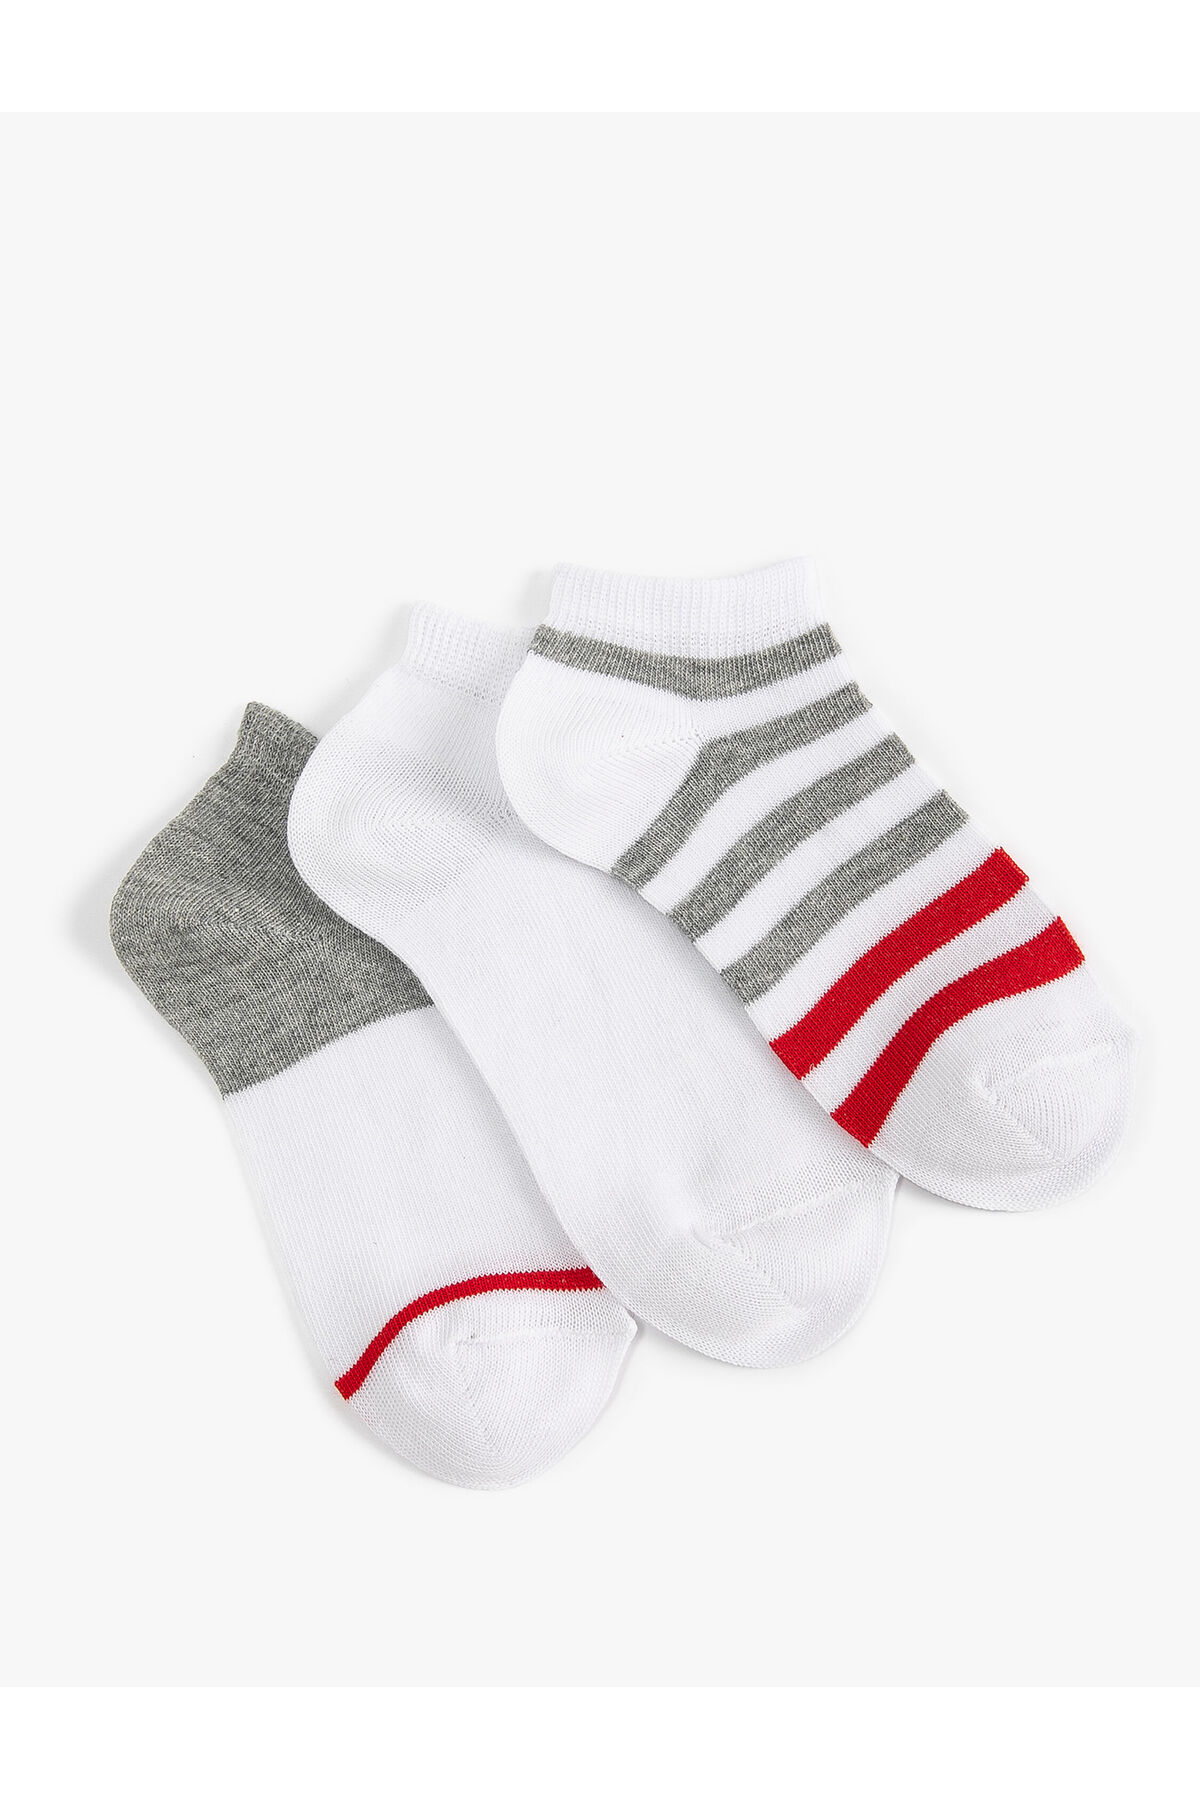 Koton 3-Pack Multi Color Striped Cotton Blend Socks Set